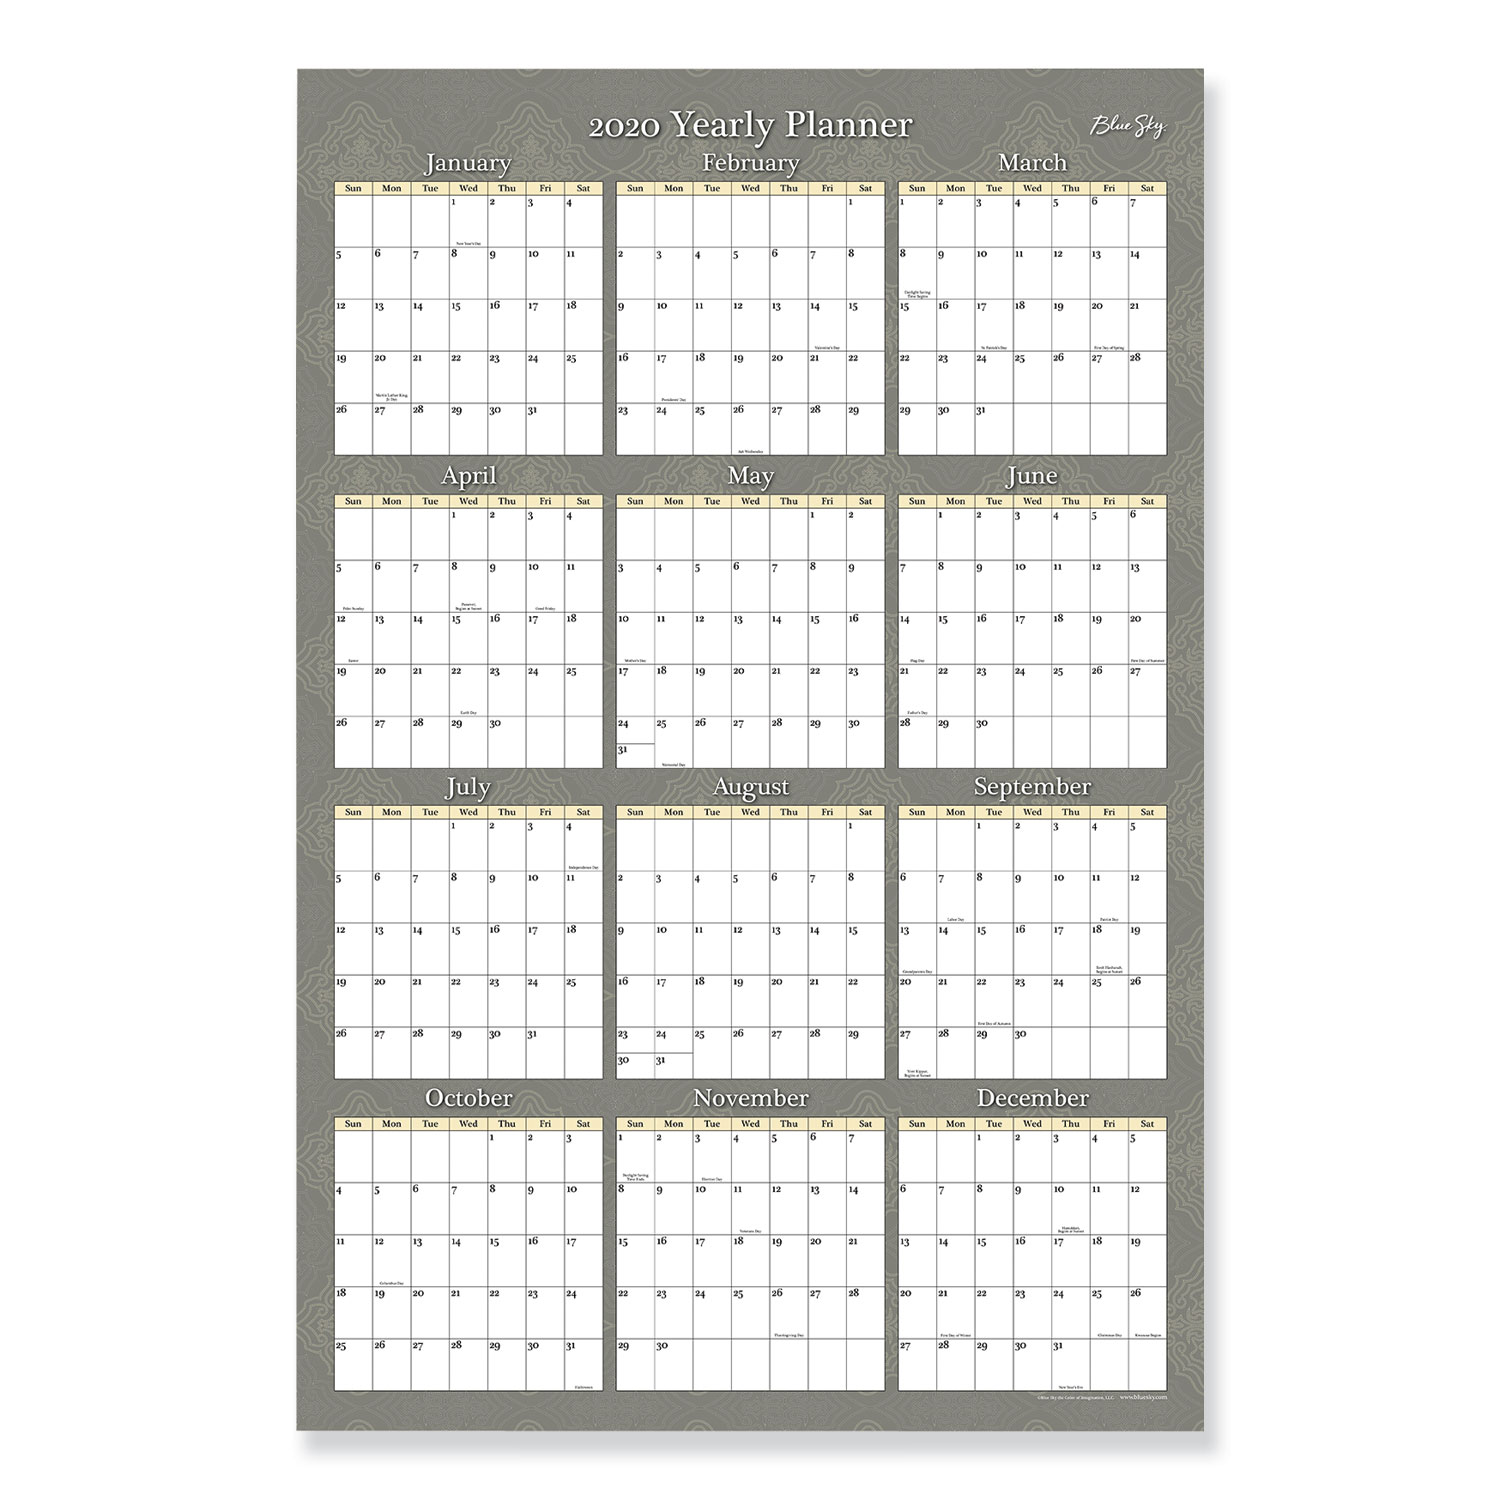 Adrianna Laminated Calendar, 36 x 24, Taupe, 2020